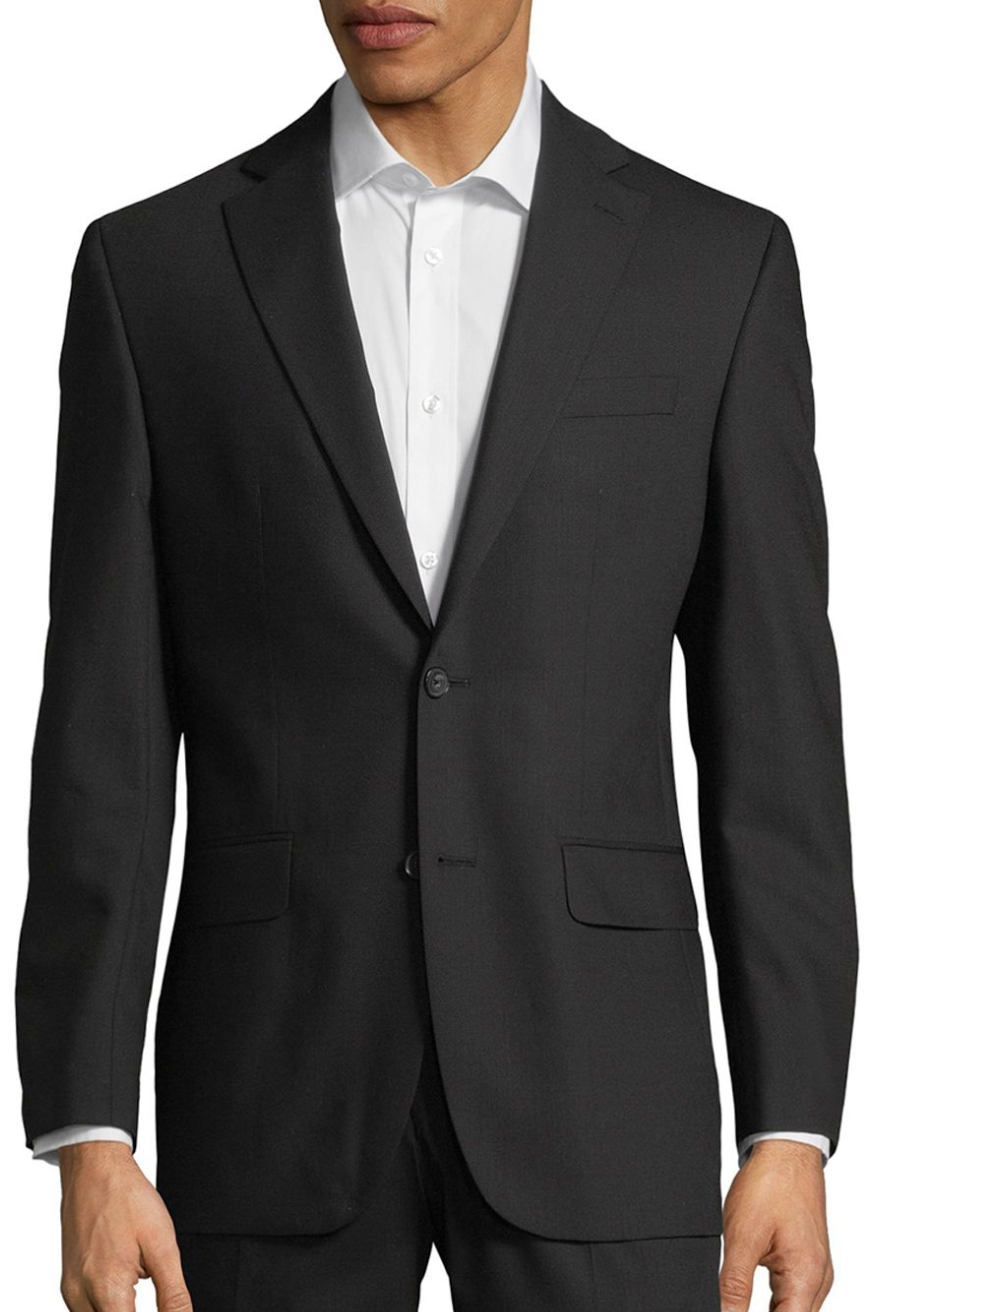 Jack Victor Suit - 3Sixty5 Black